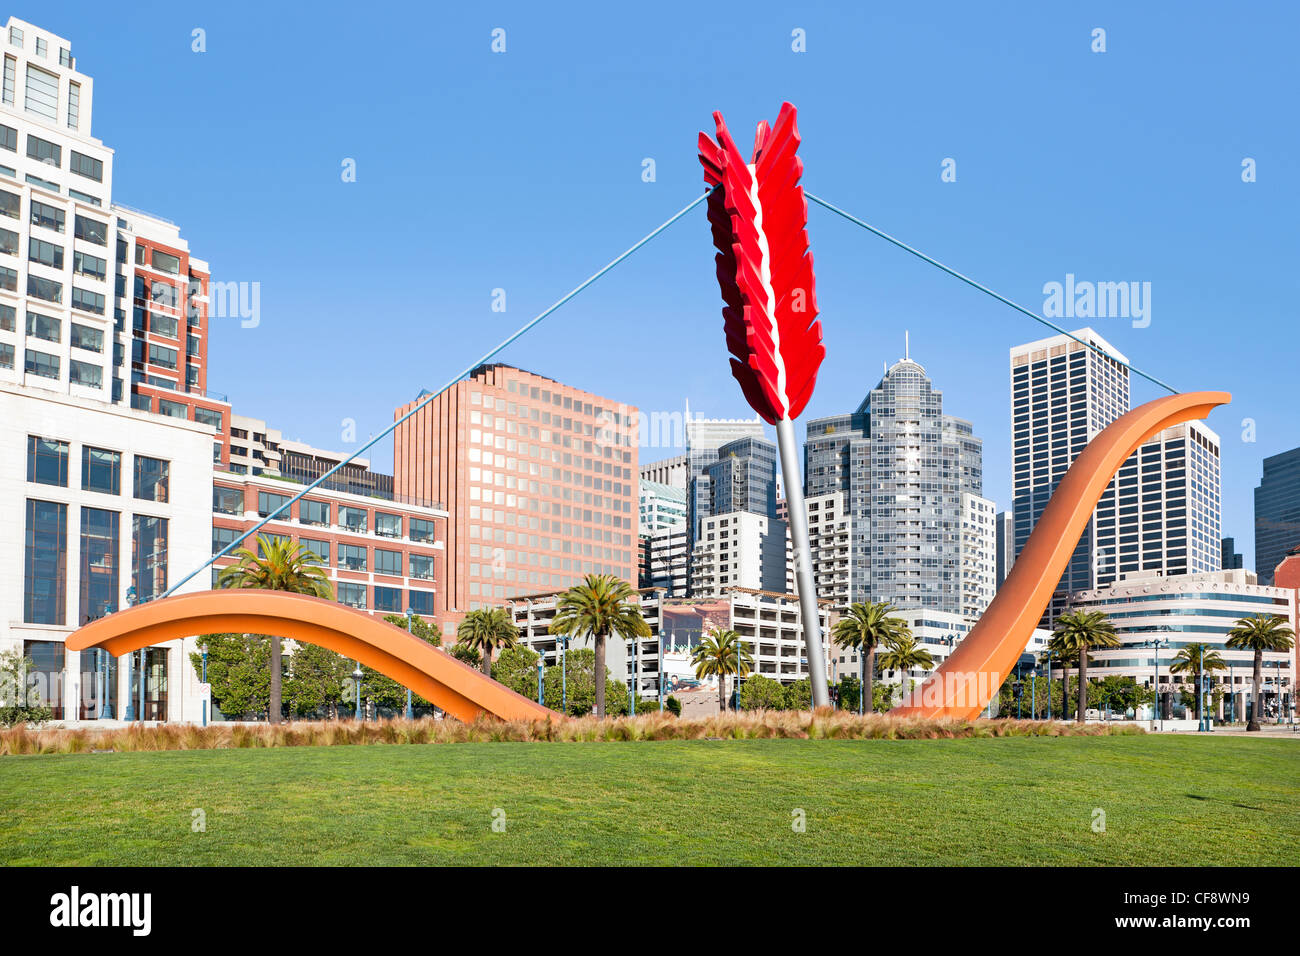 Bow and Arrow Sculpture in Rincon Park, Embarcadero, San Francisco, California, United States of America Stock Photo